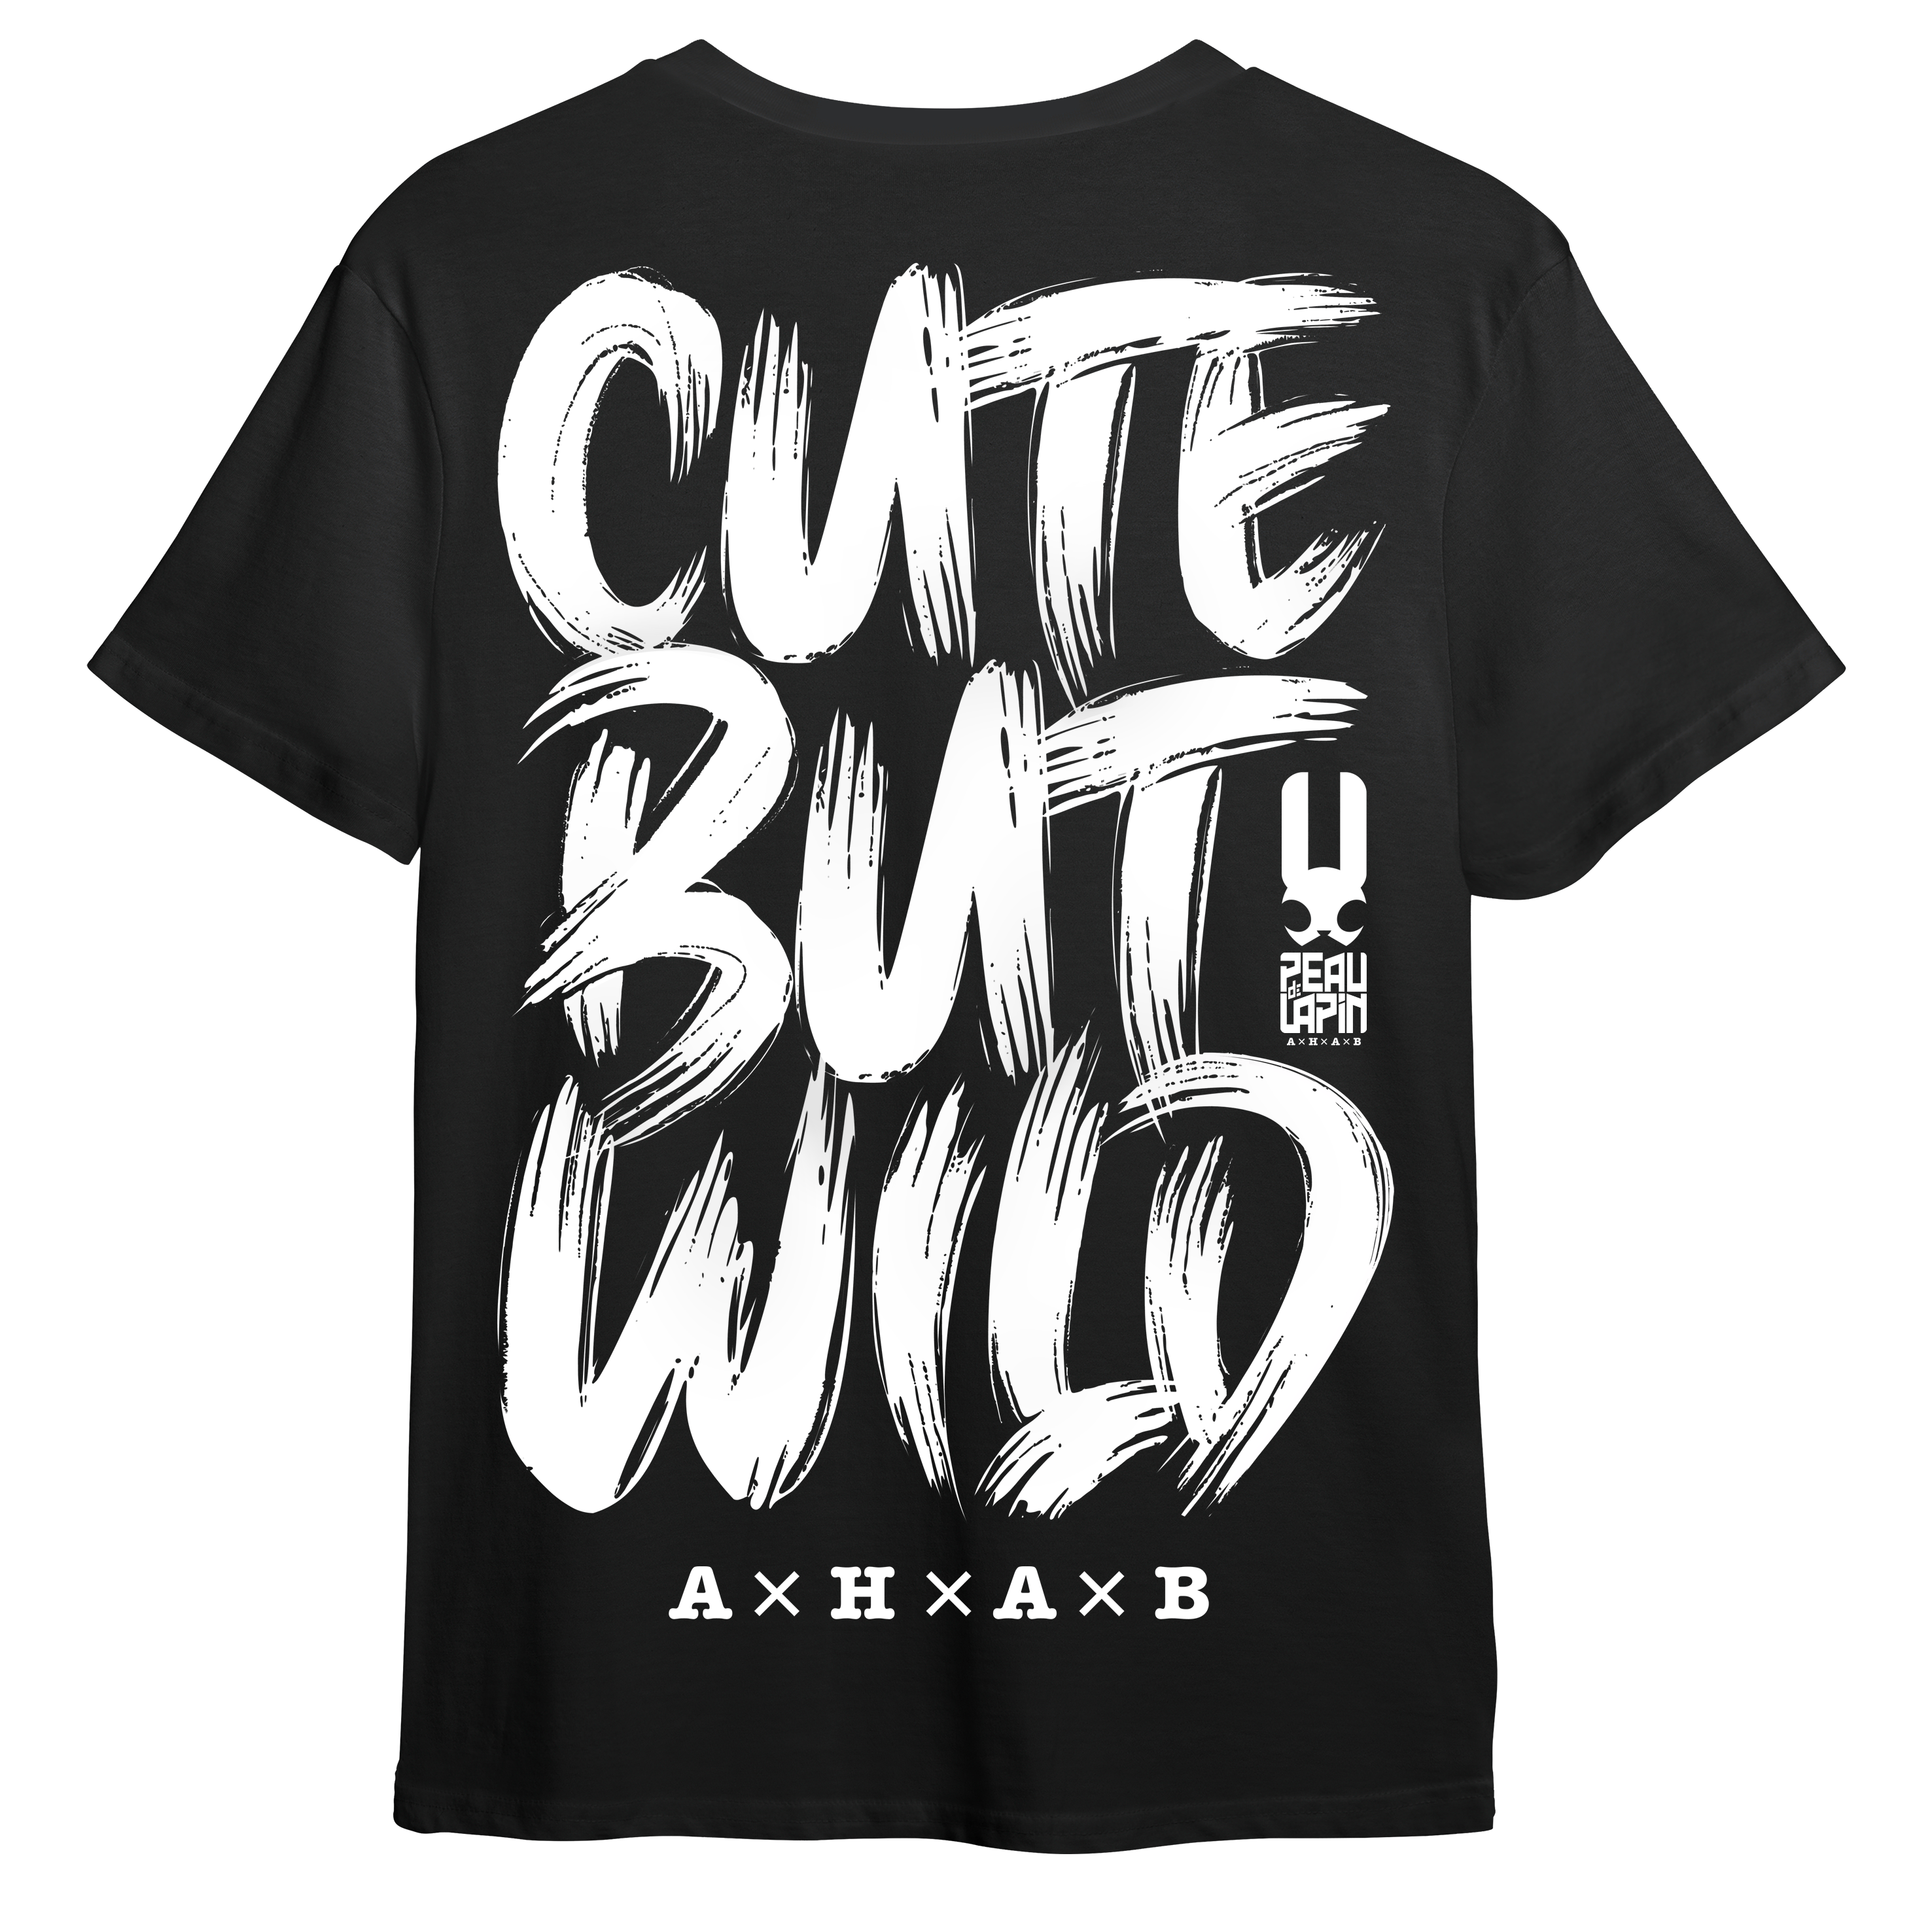 T-shirt "Cute But Wild" - ETHIK LABEL